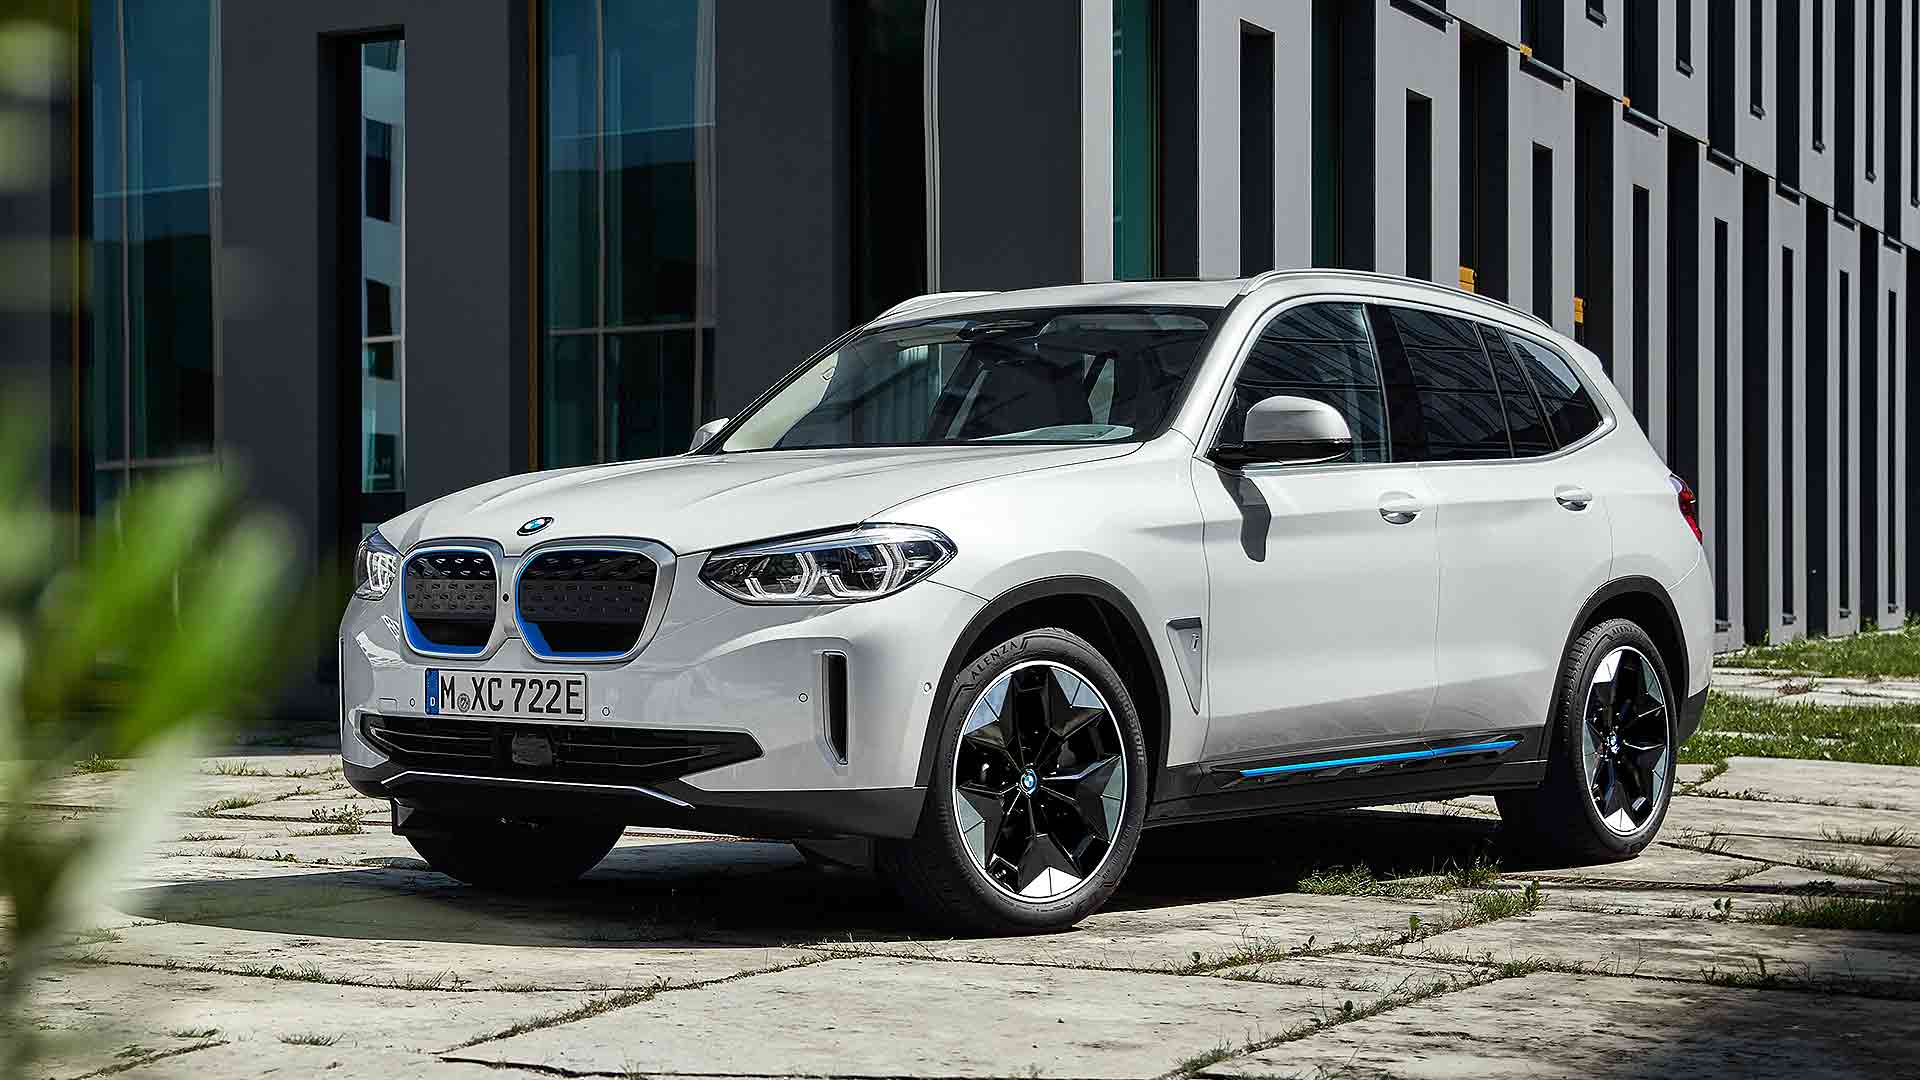 New BMW ix3 electric SUV